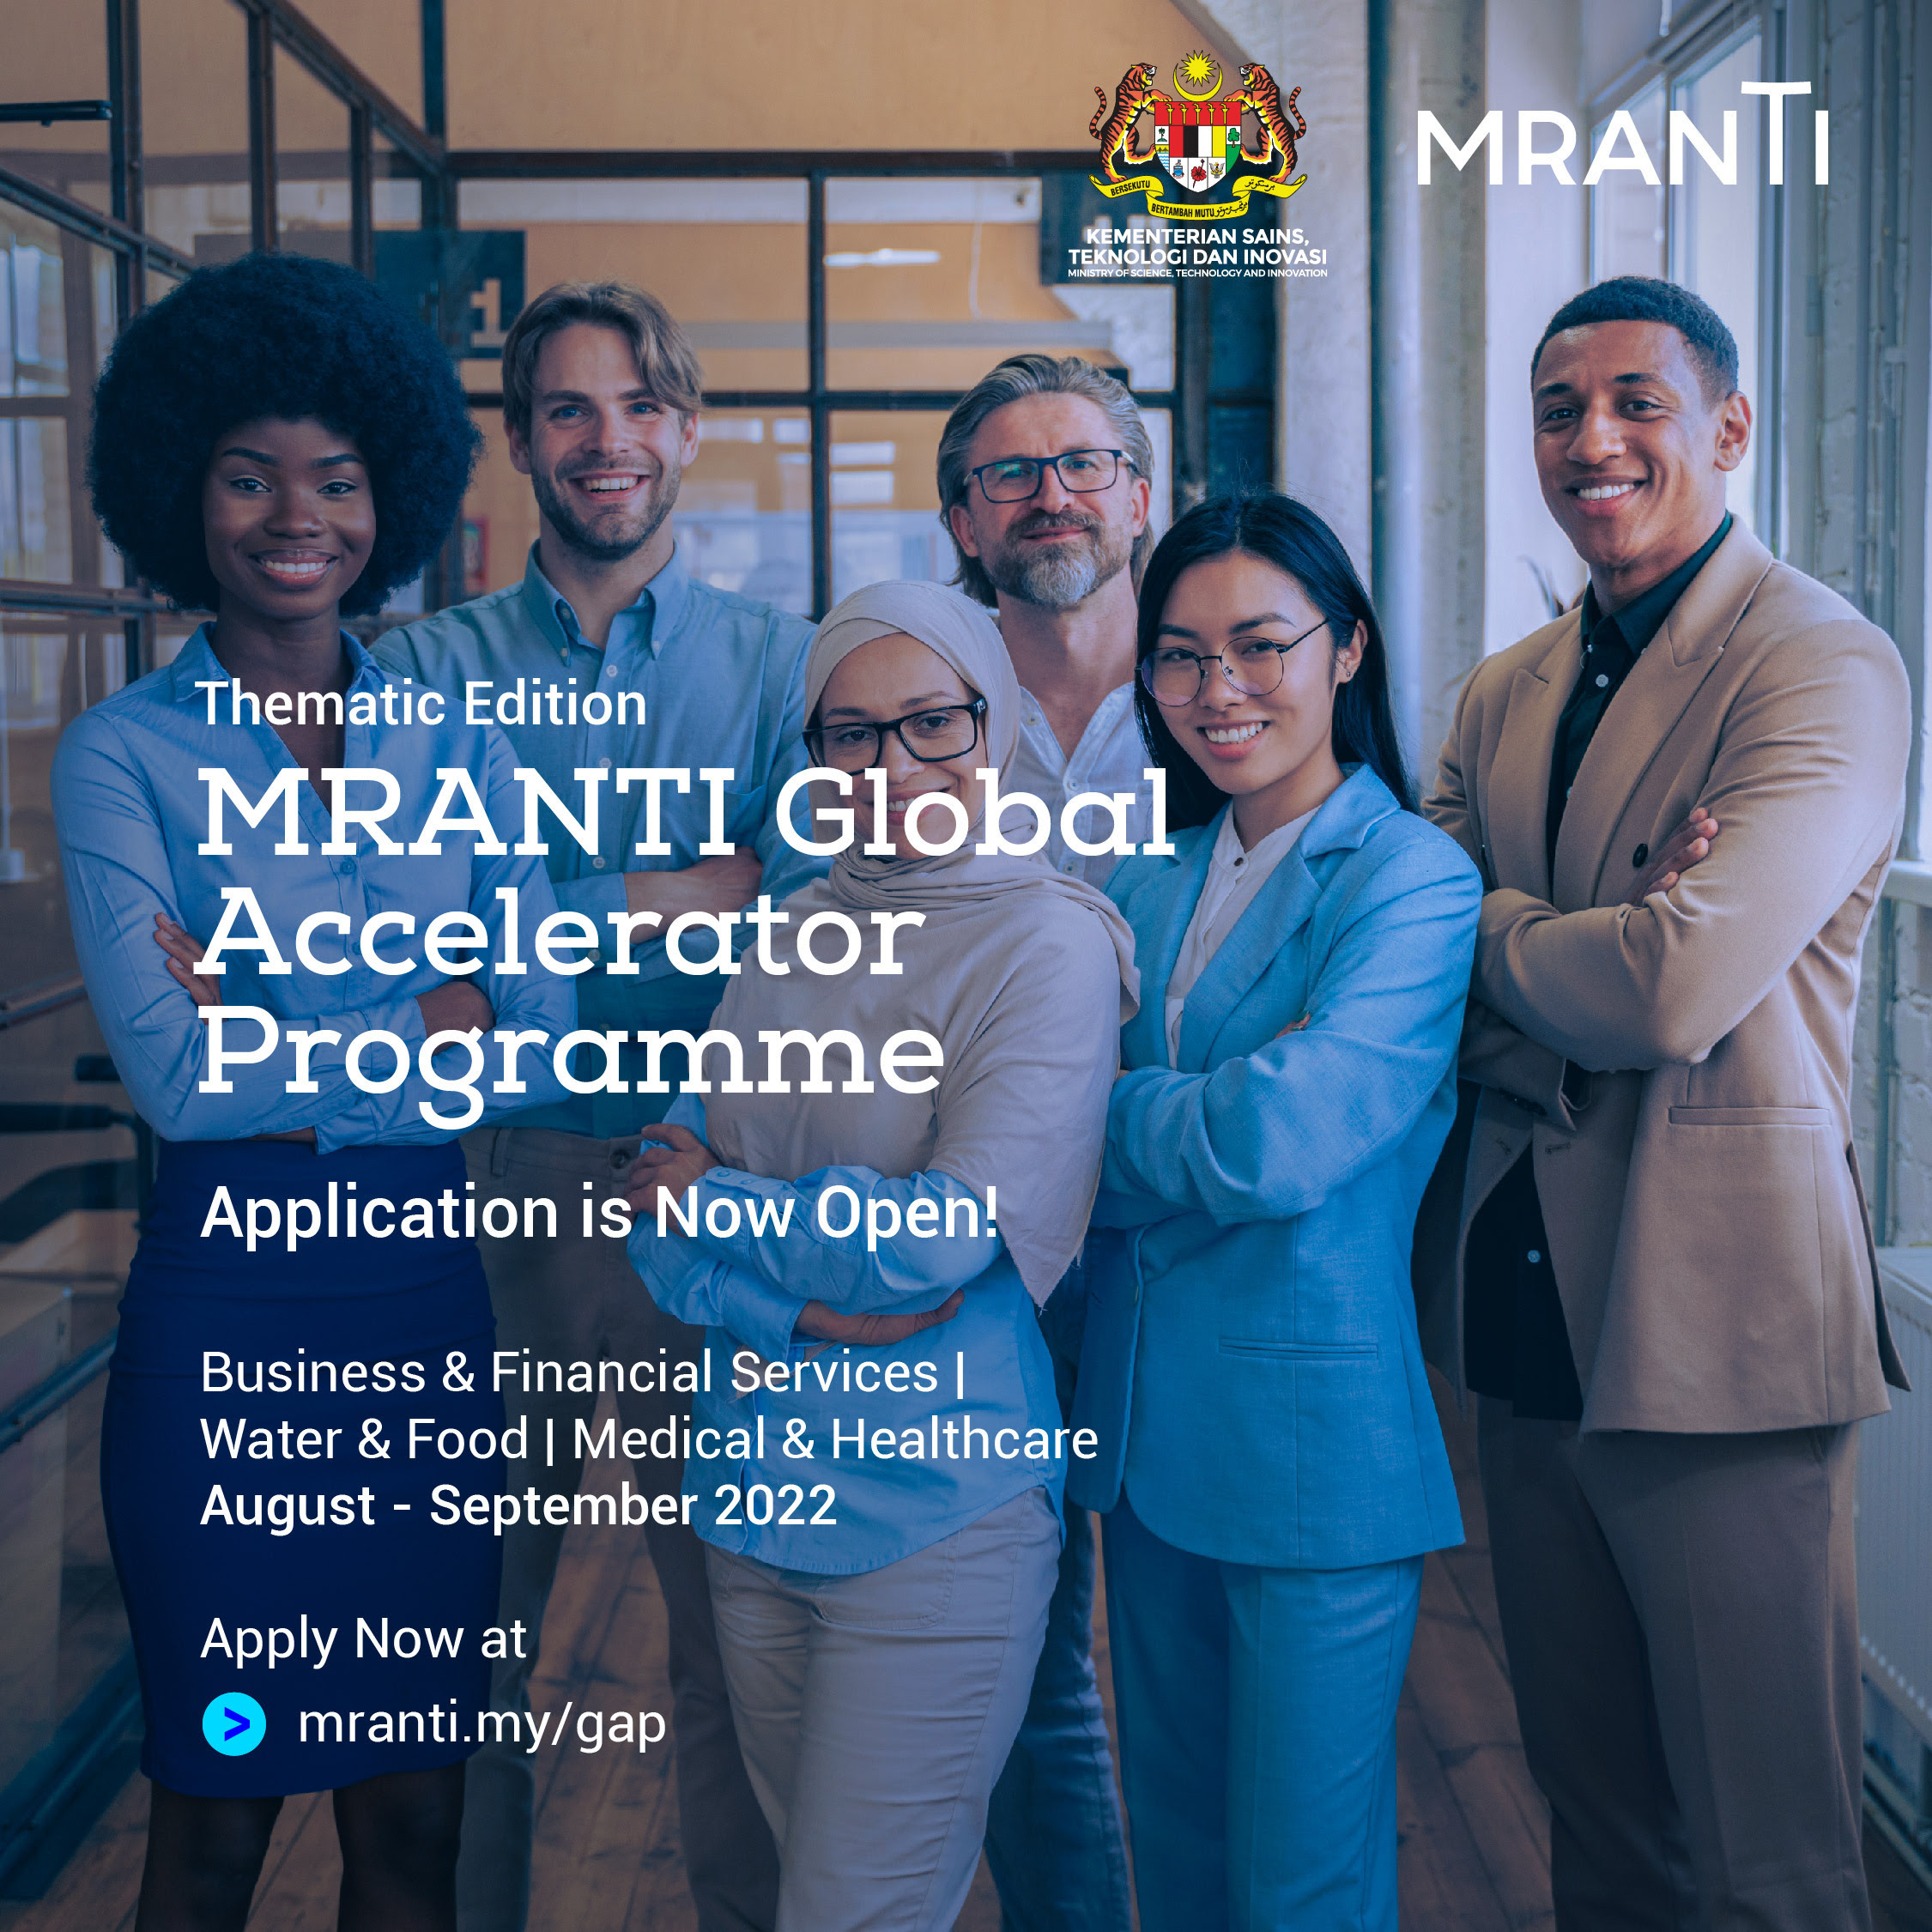 MRANTI Global Accelerator Programme: Thematic Edition